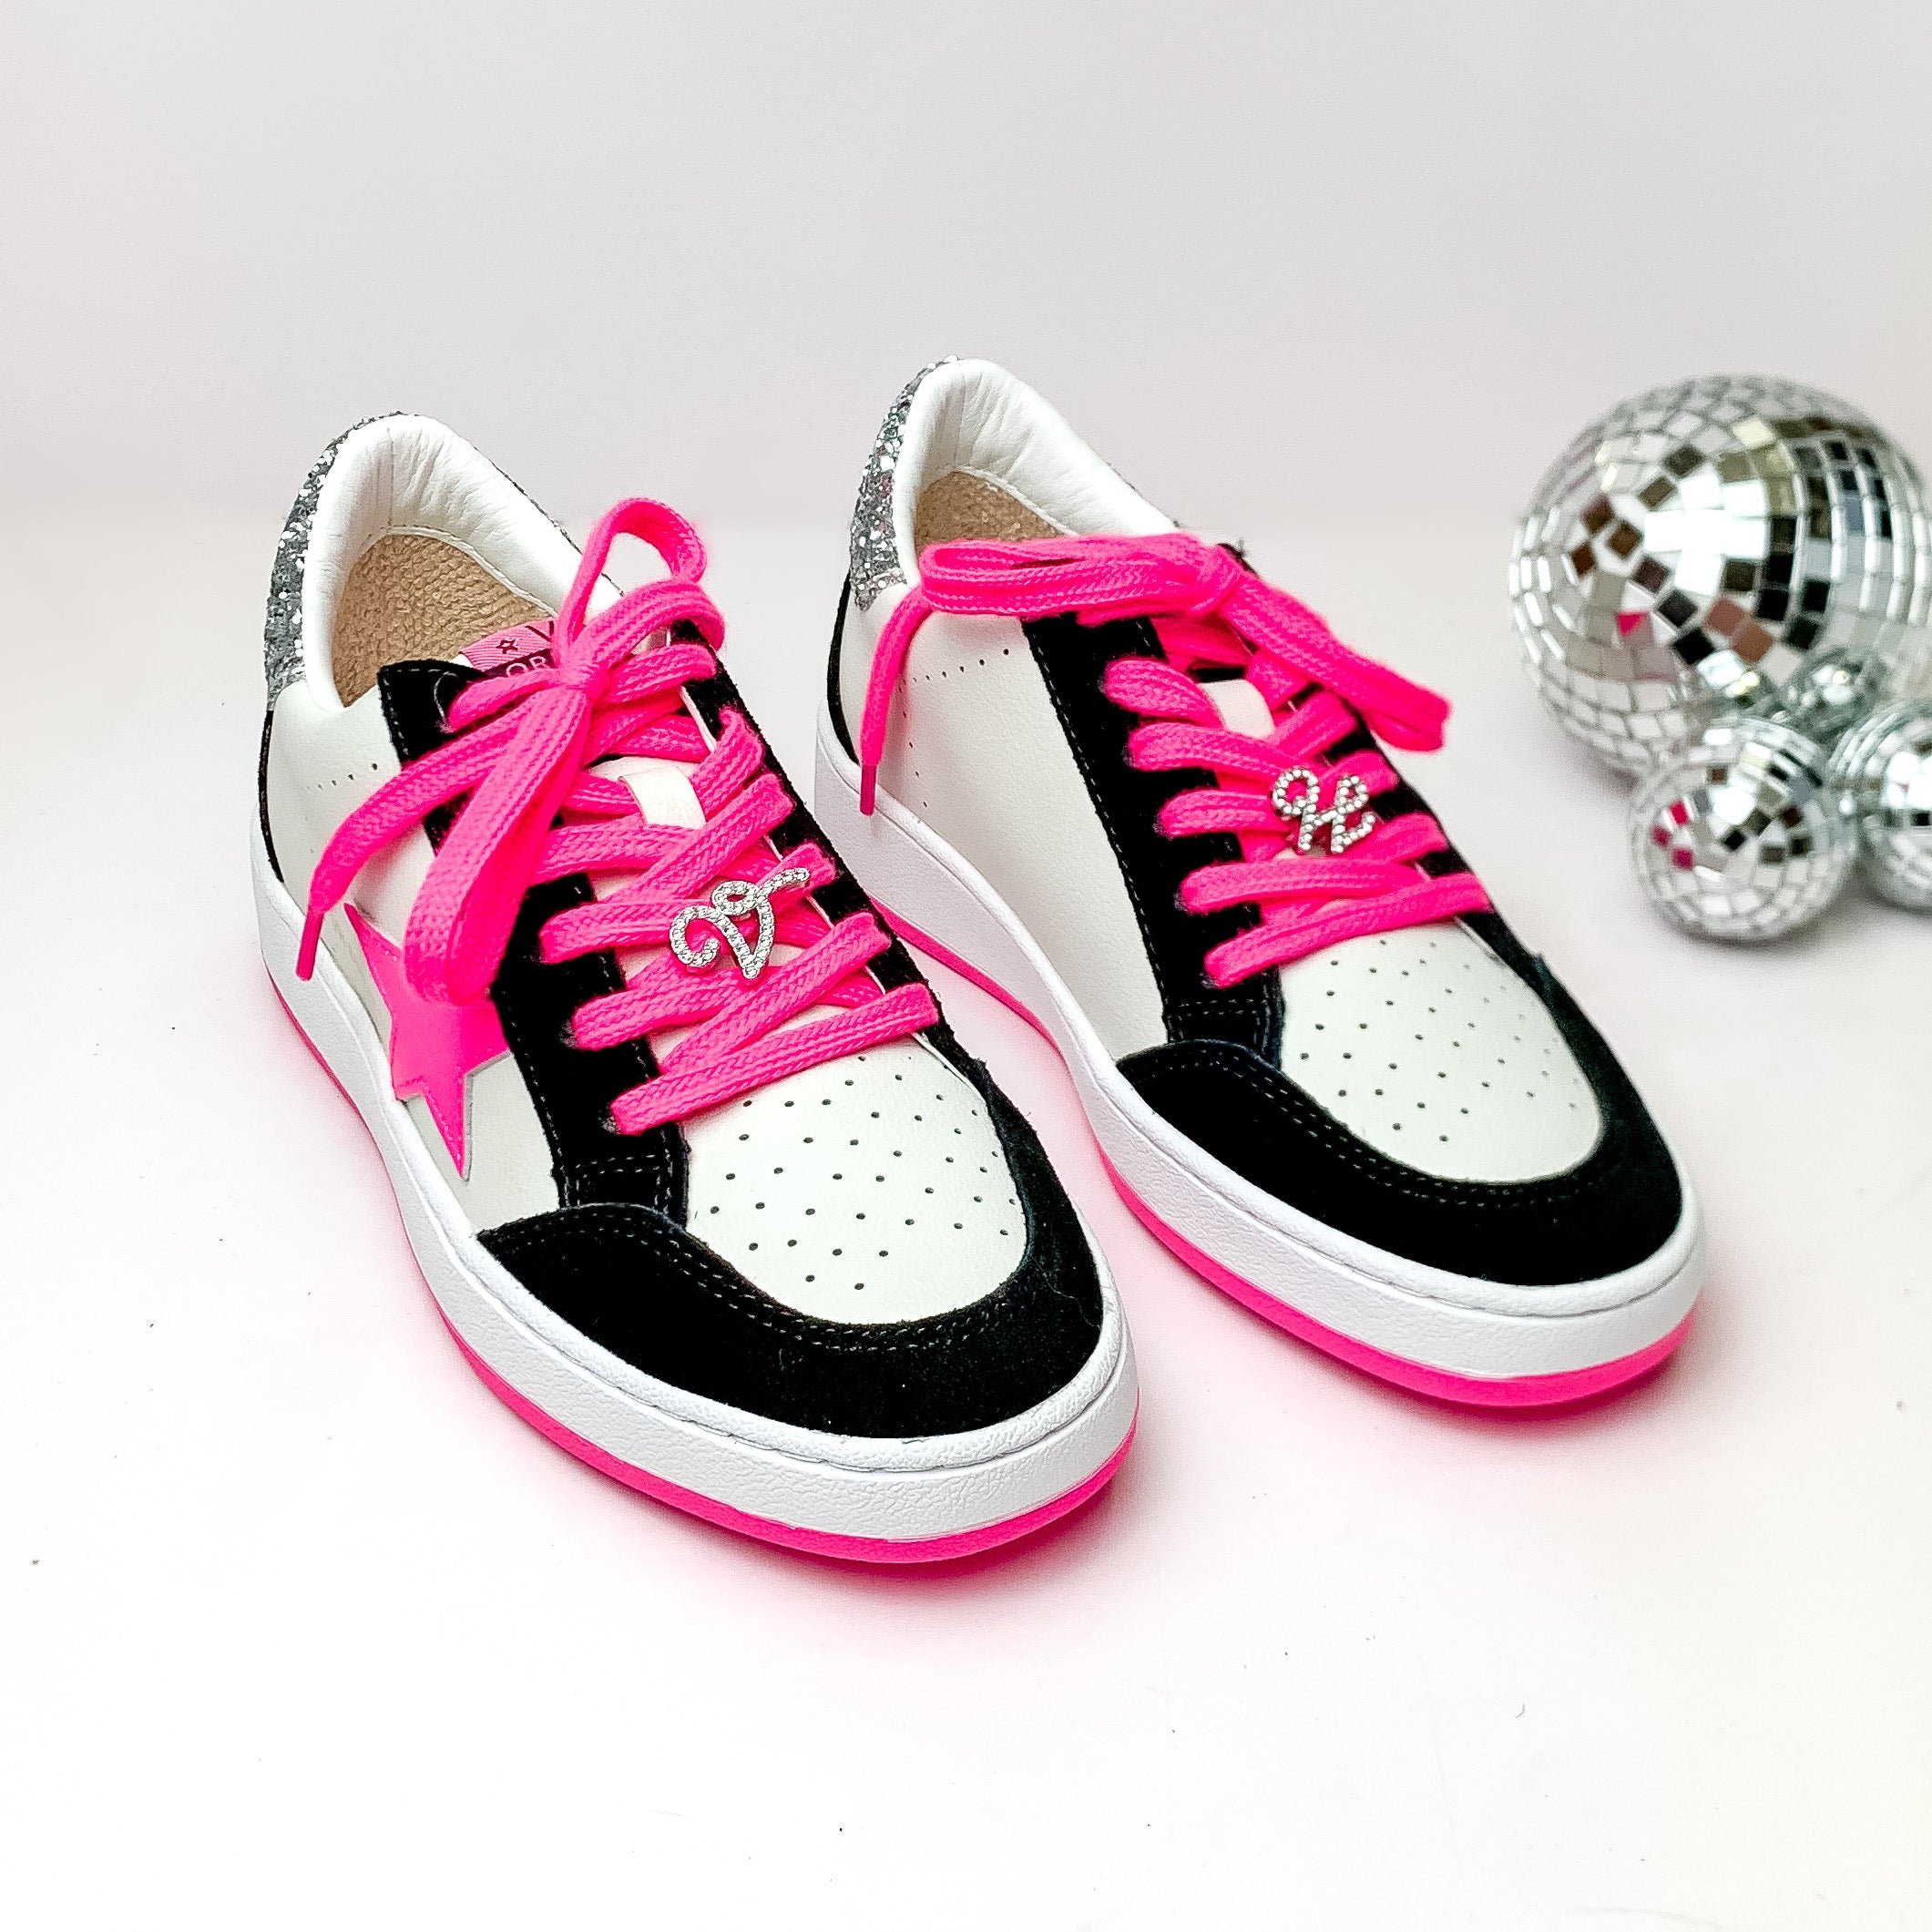 Online Exclusive | Vintage Havana | Denisse 5 Sneakers in Pink Pop - Giddy Up Glamour Boutique